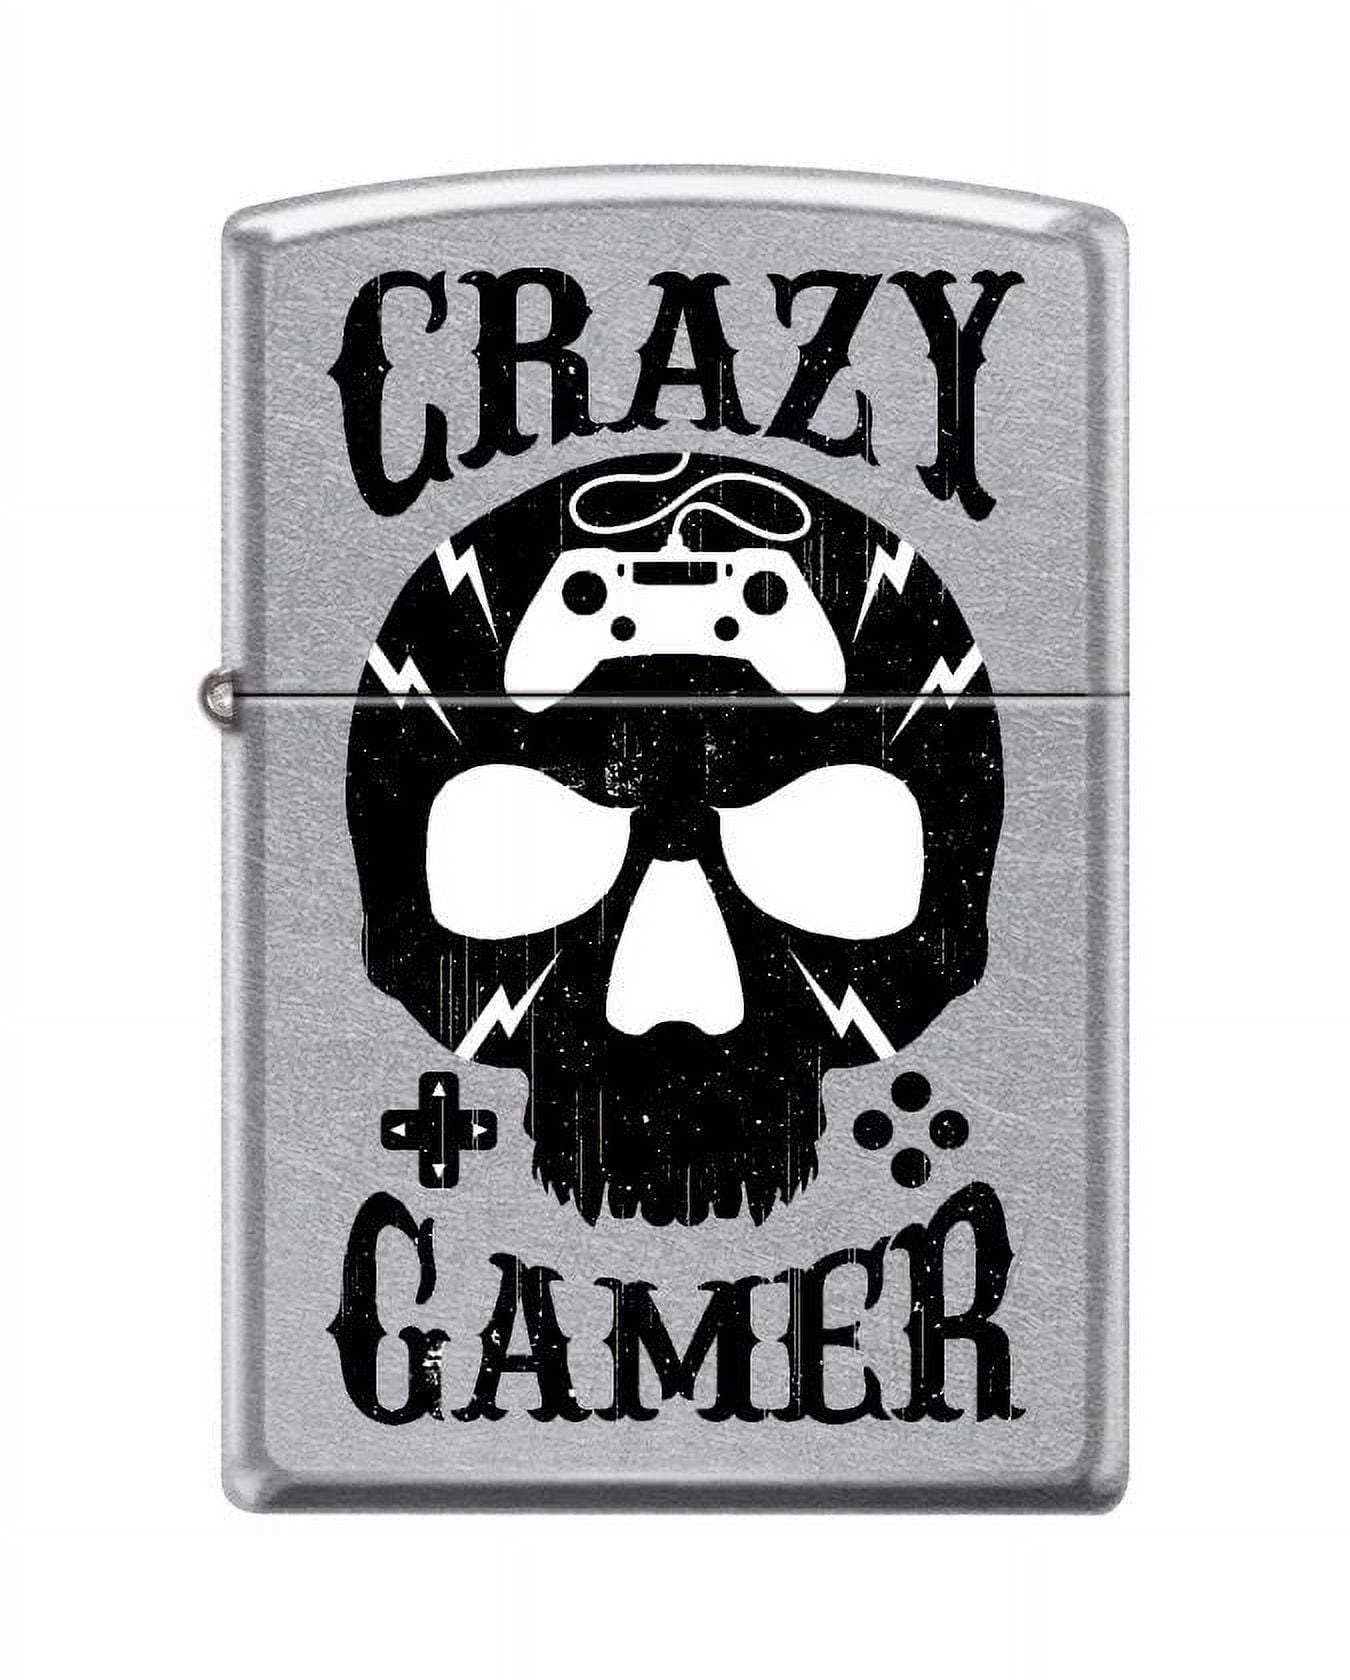 Crazy Gamer 